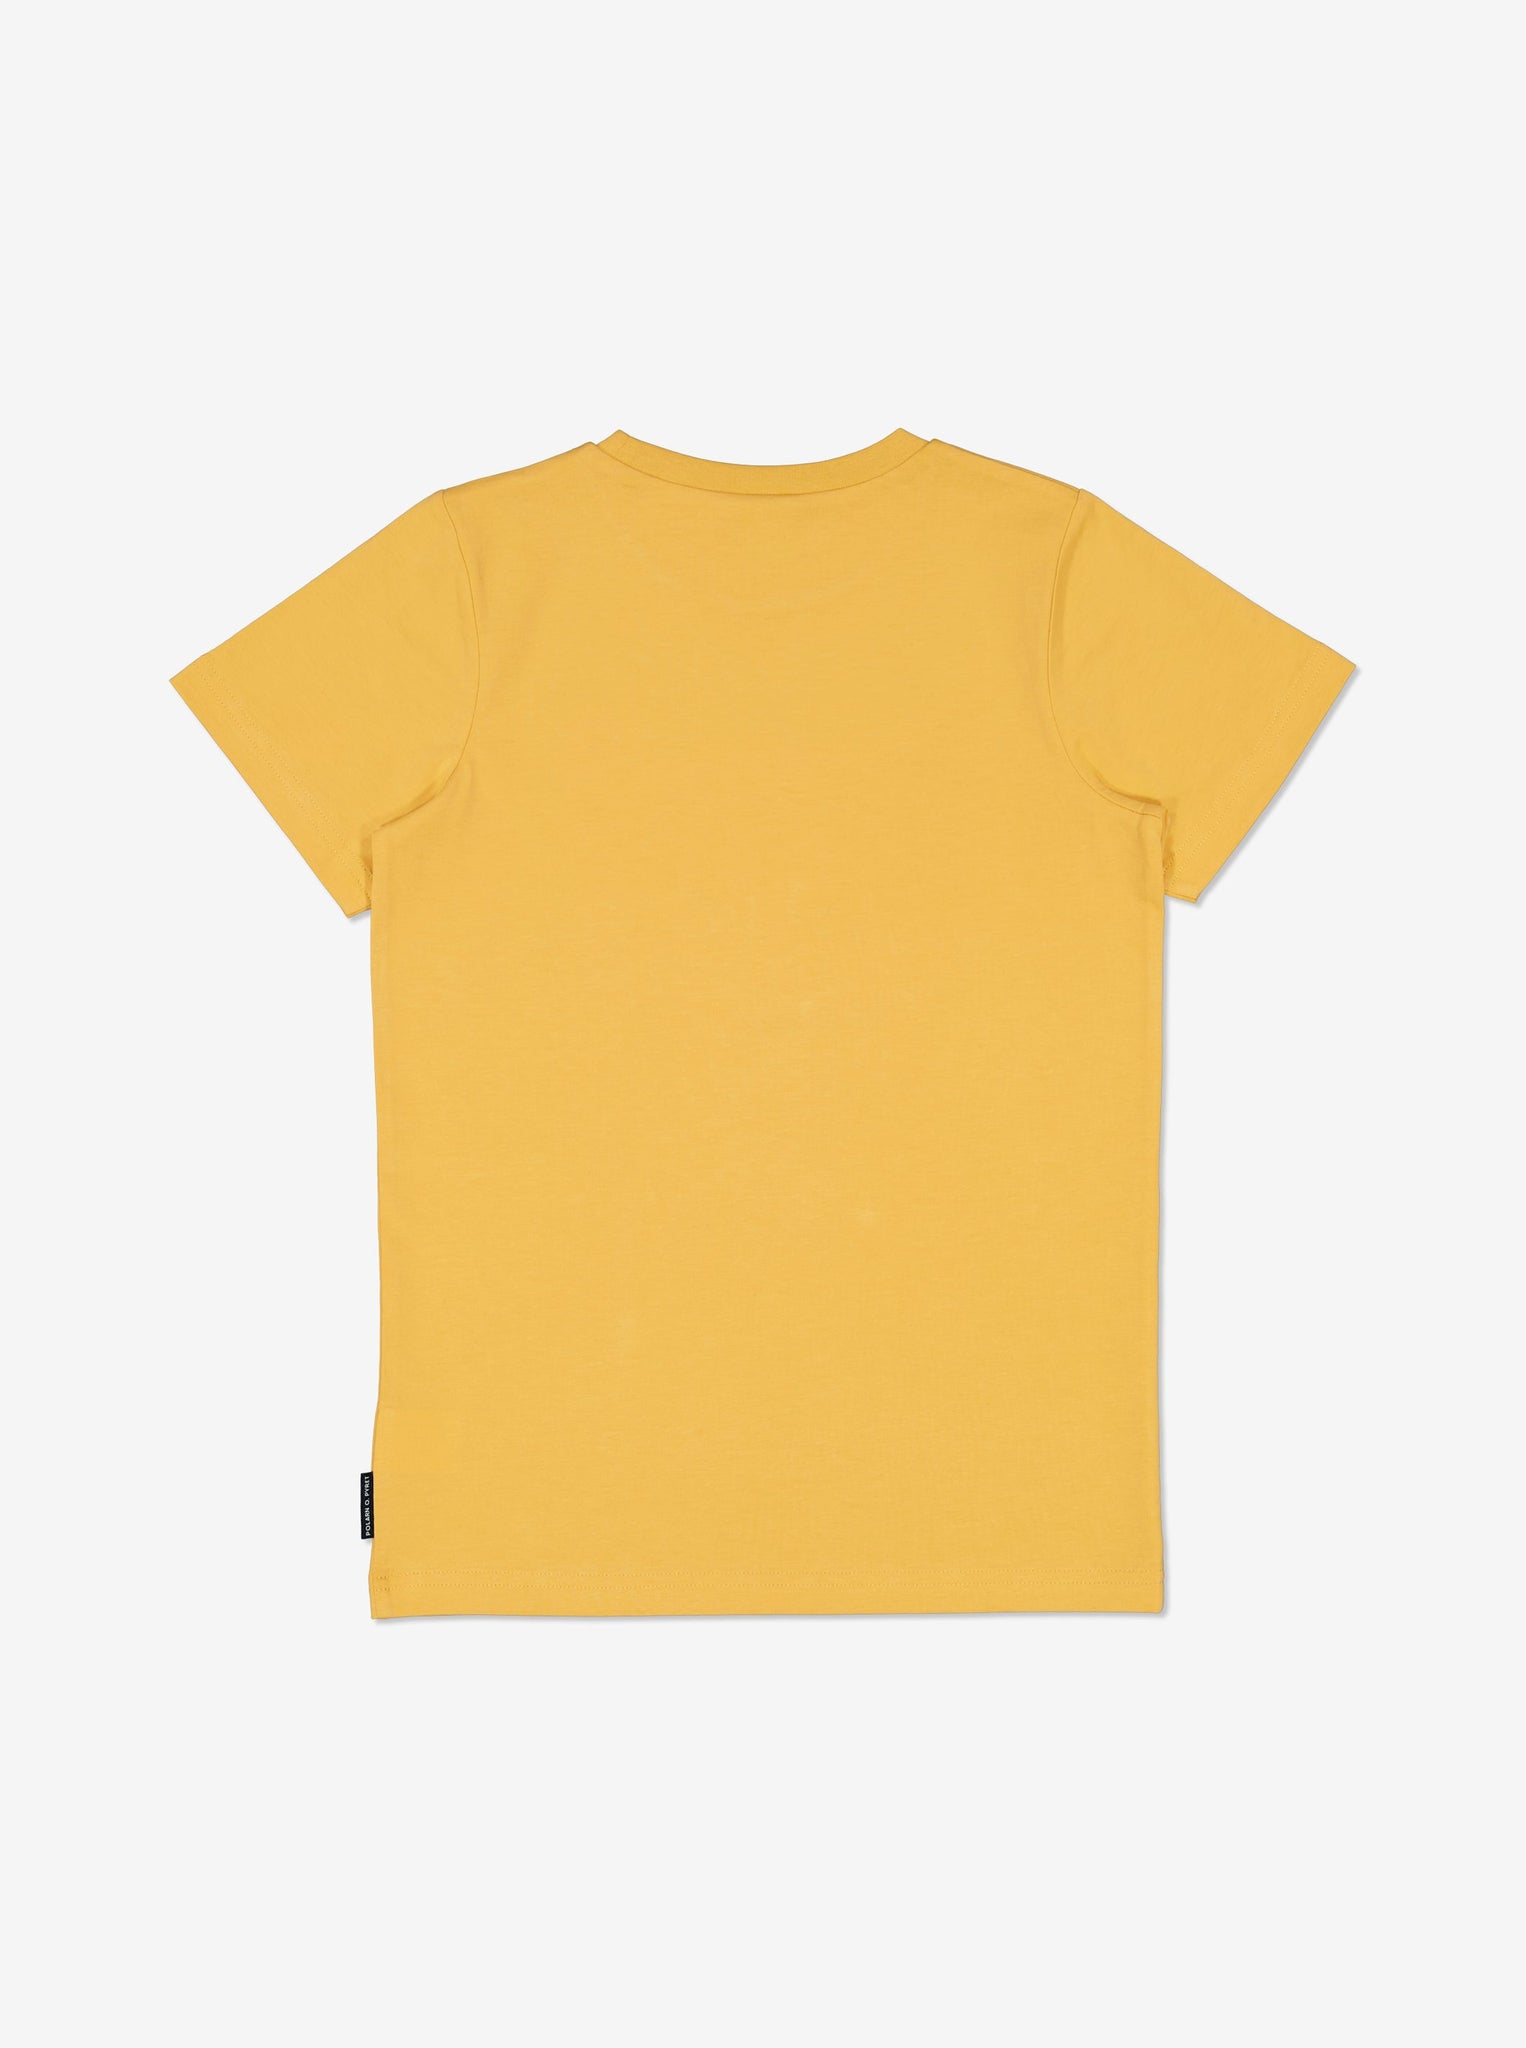  Organic Cotton Yellow Kids T-Shirt from Polarn O. Pyret Kidswear. Made Using 100% Organic Cotton.